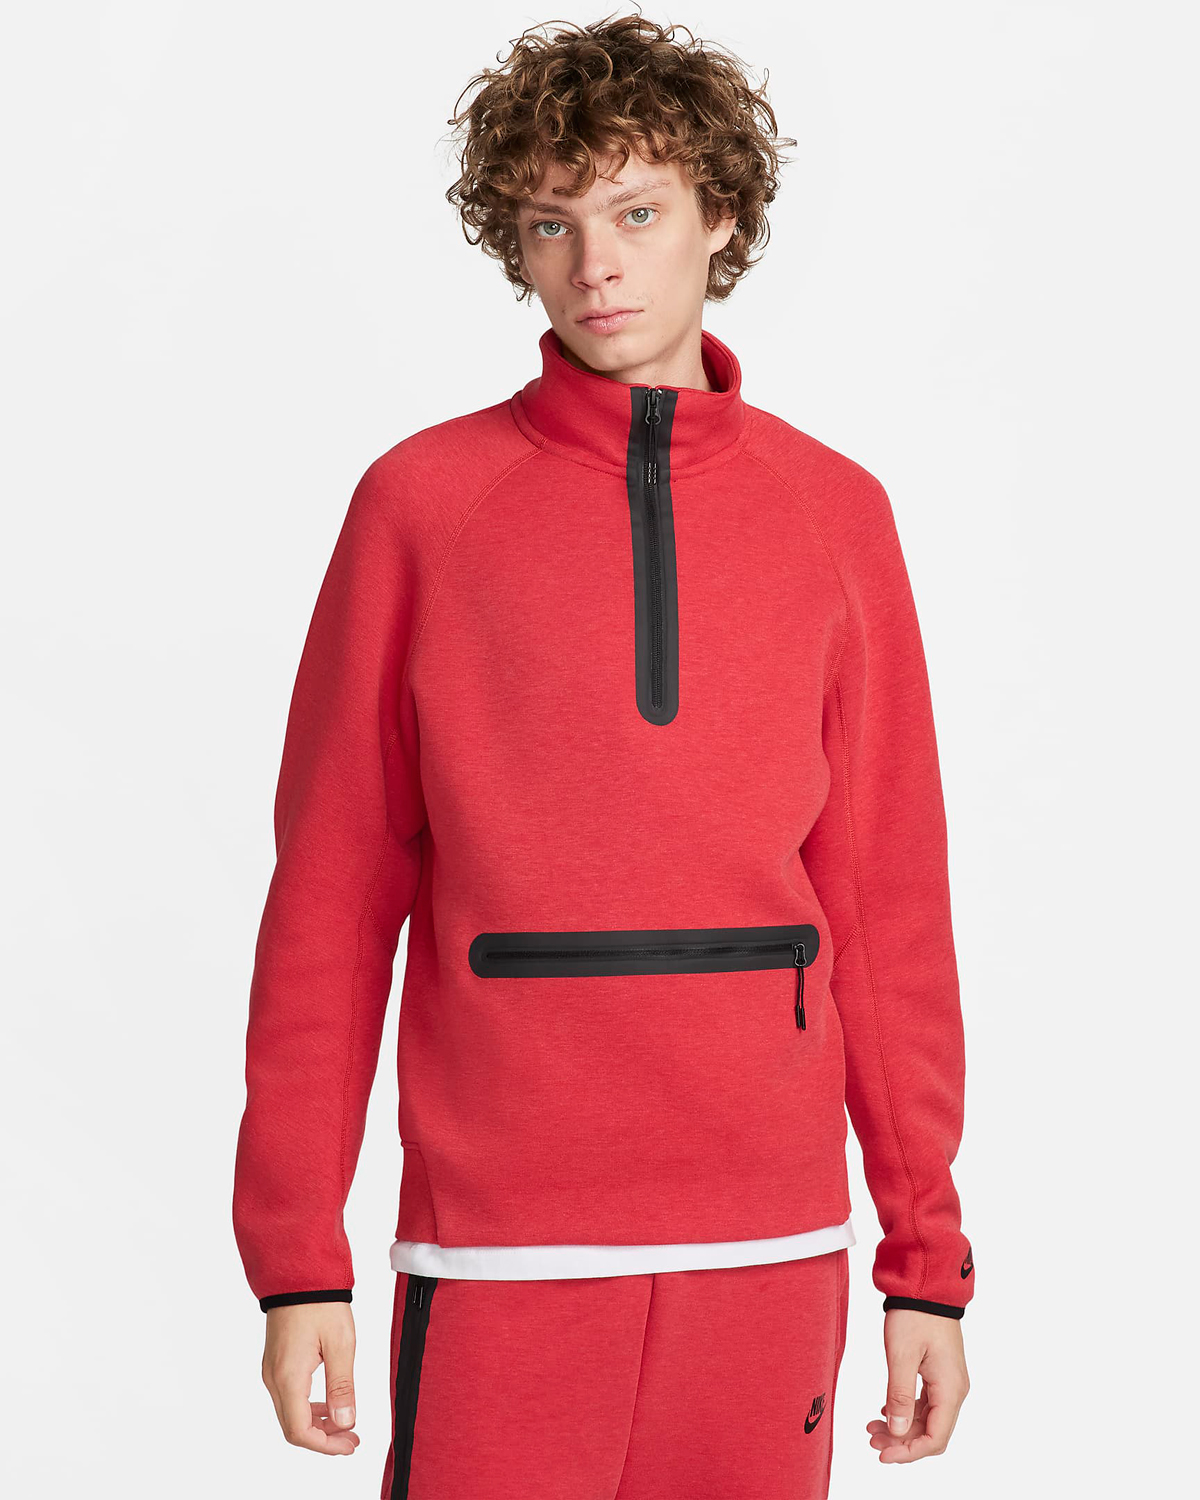 NIke-Tech-Fleece-Zip-Sweatshirt-Light-University-Red